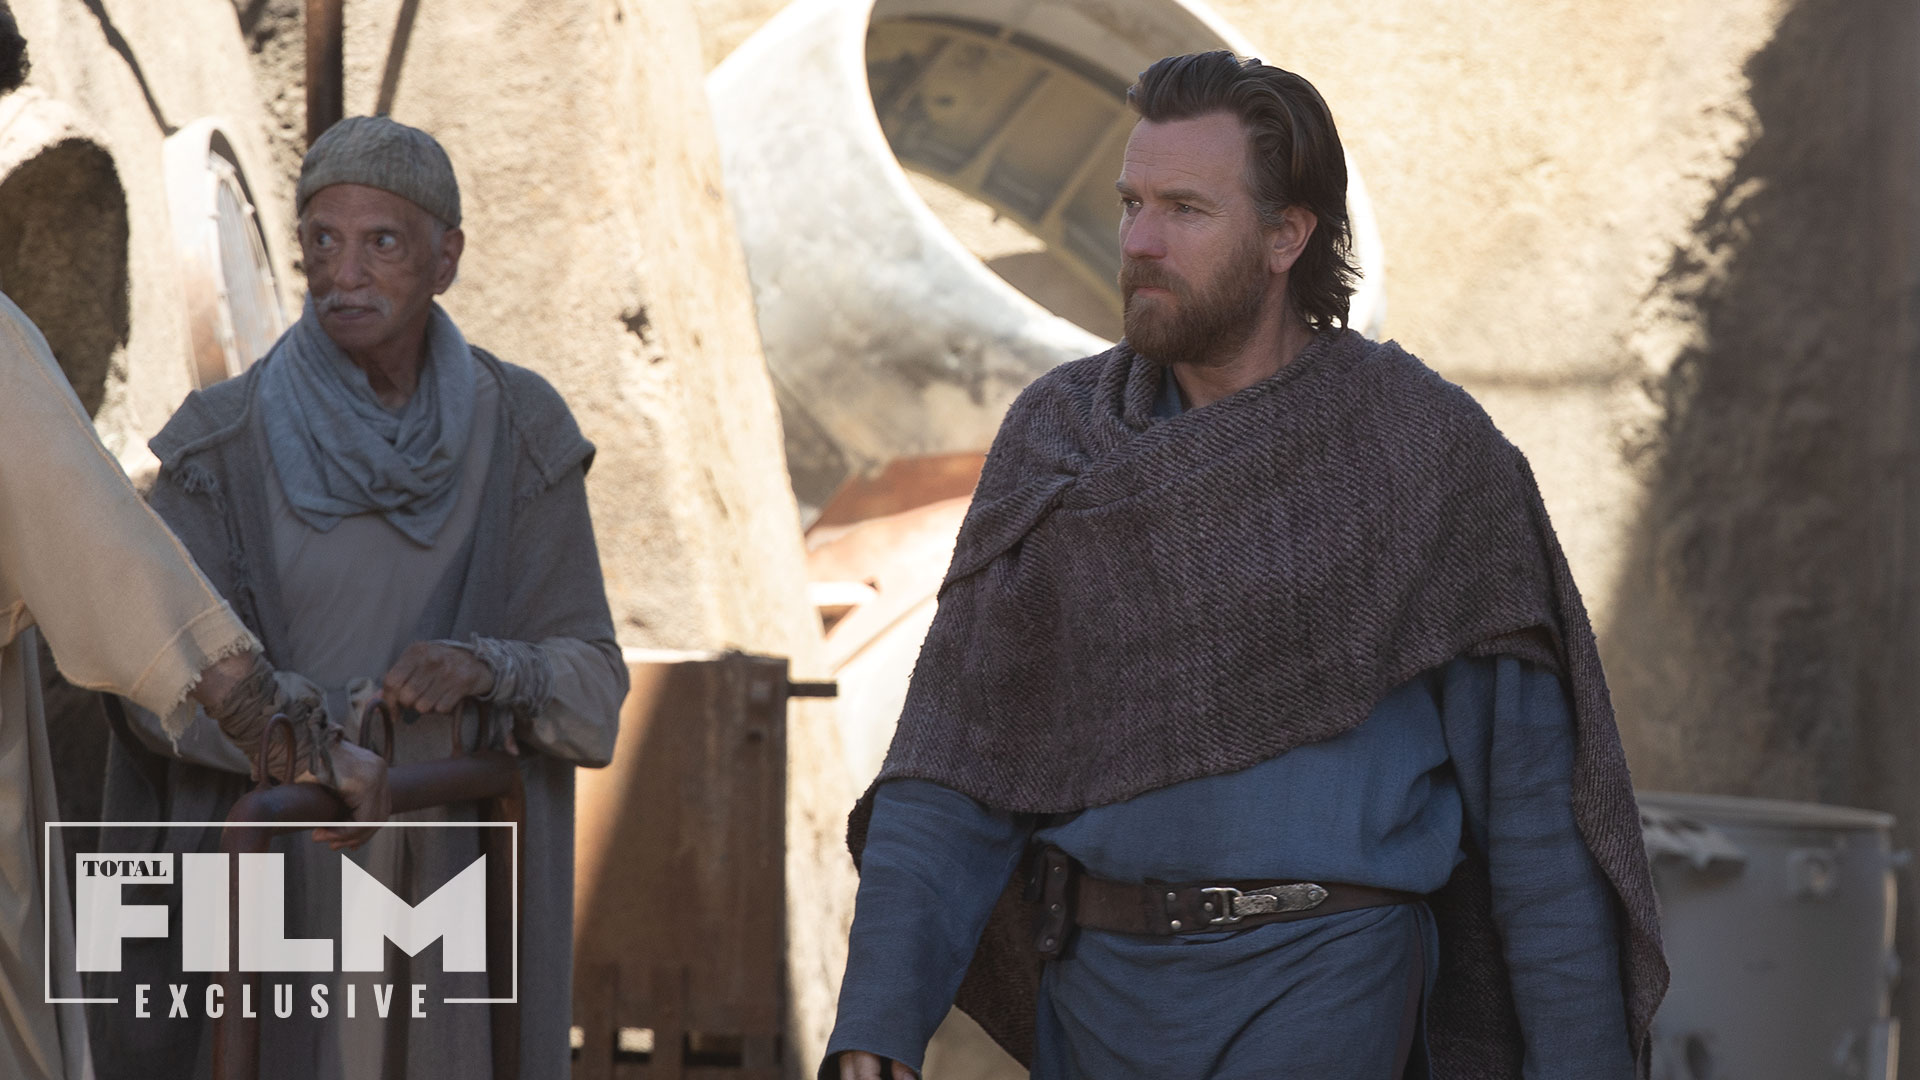 Ewan McGregor returns in these exclusive images from Obi-Wan Kenobi